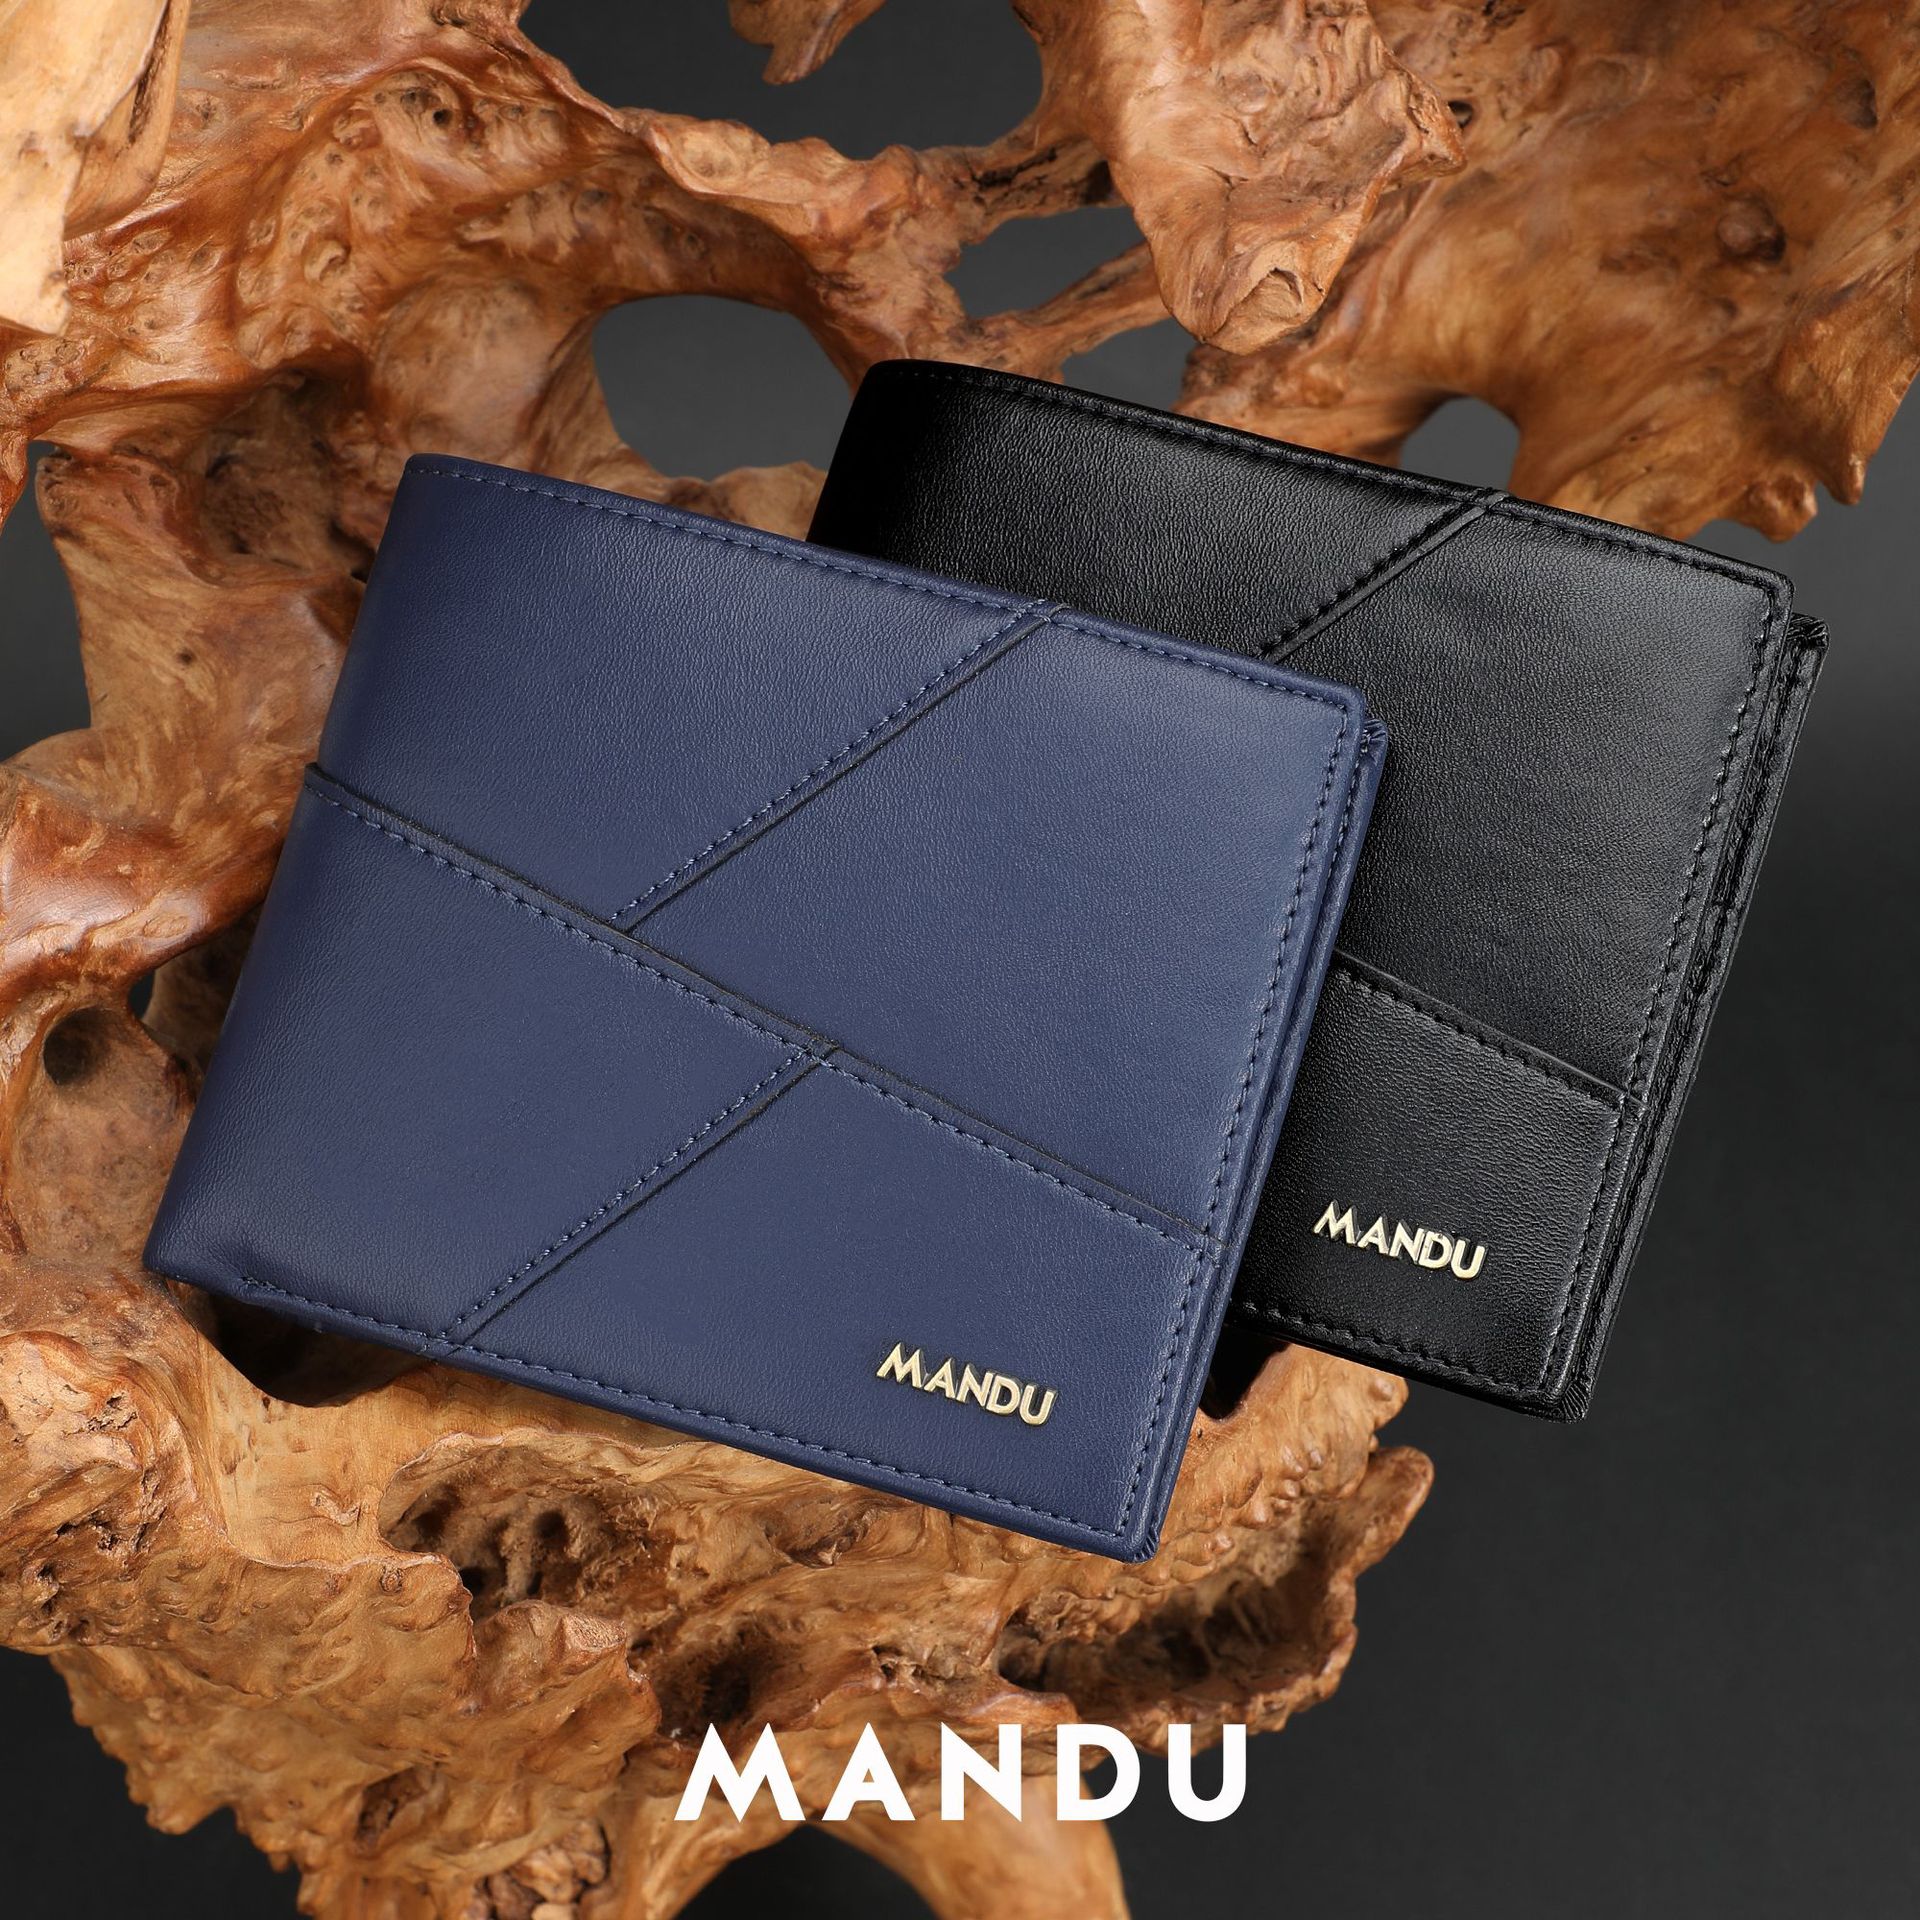 Mandu Branded Original Premium Leather Wallet (RFID) with Branded Gift Box